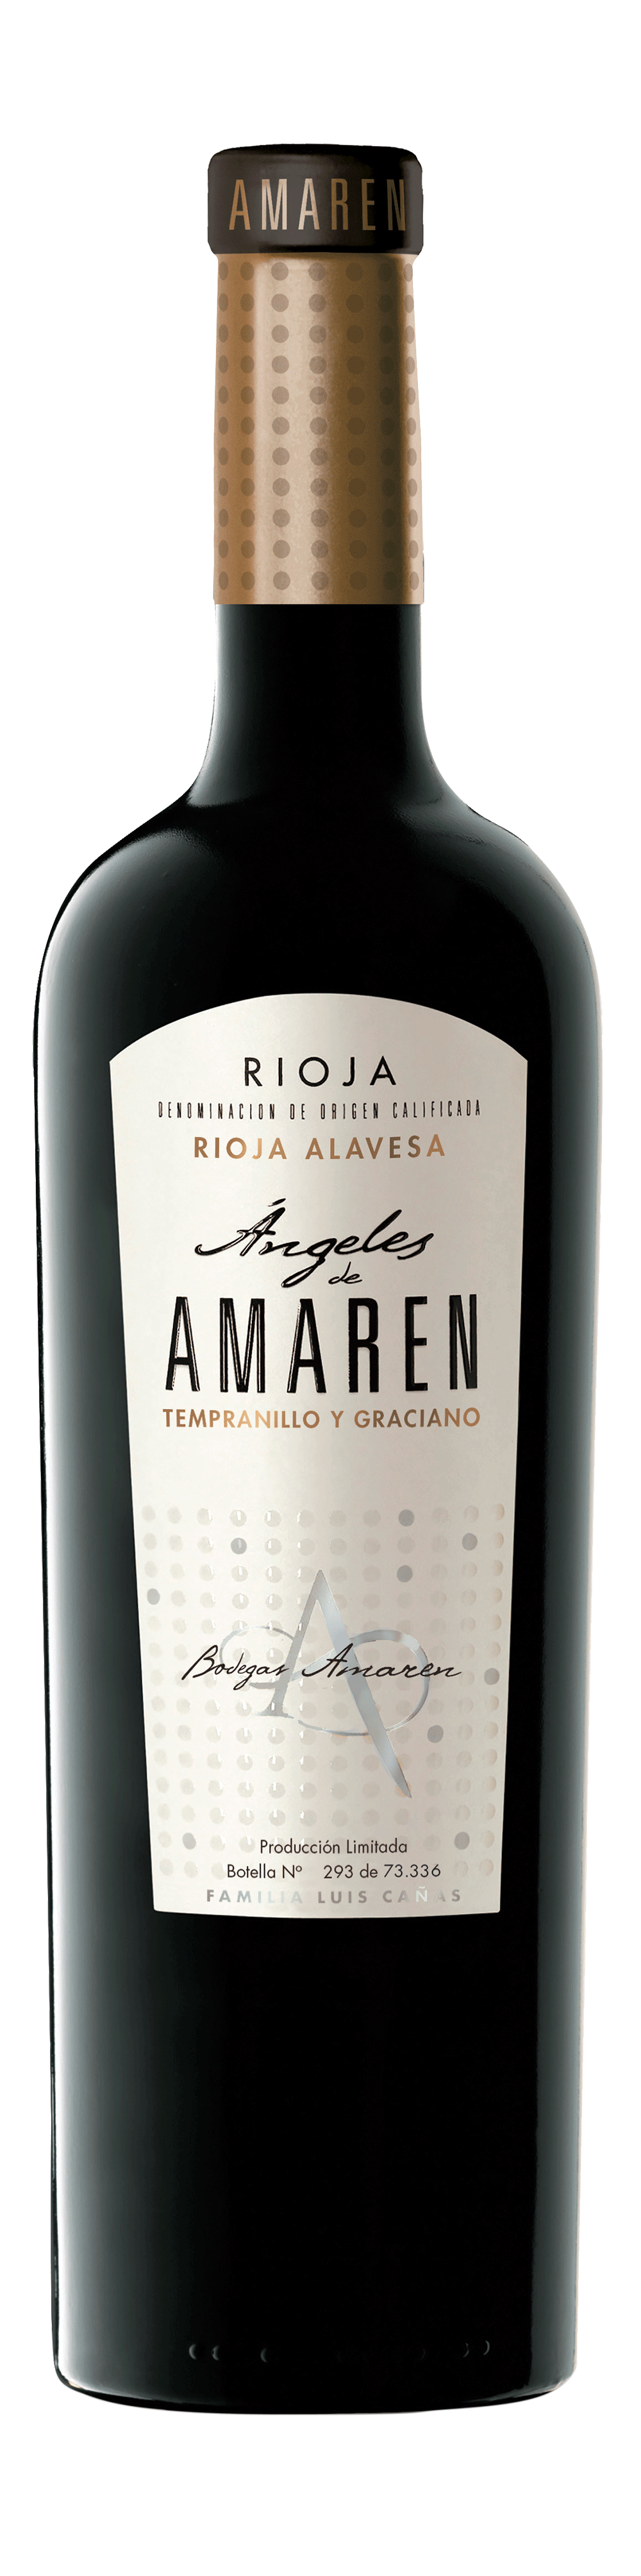 Bodegas Amaren, Ángeles de Amaren, Rioja, Spain, 2018